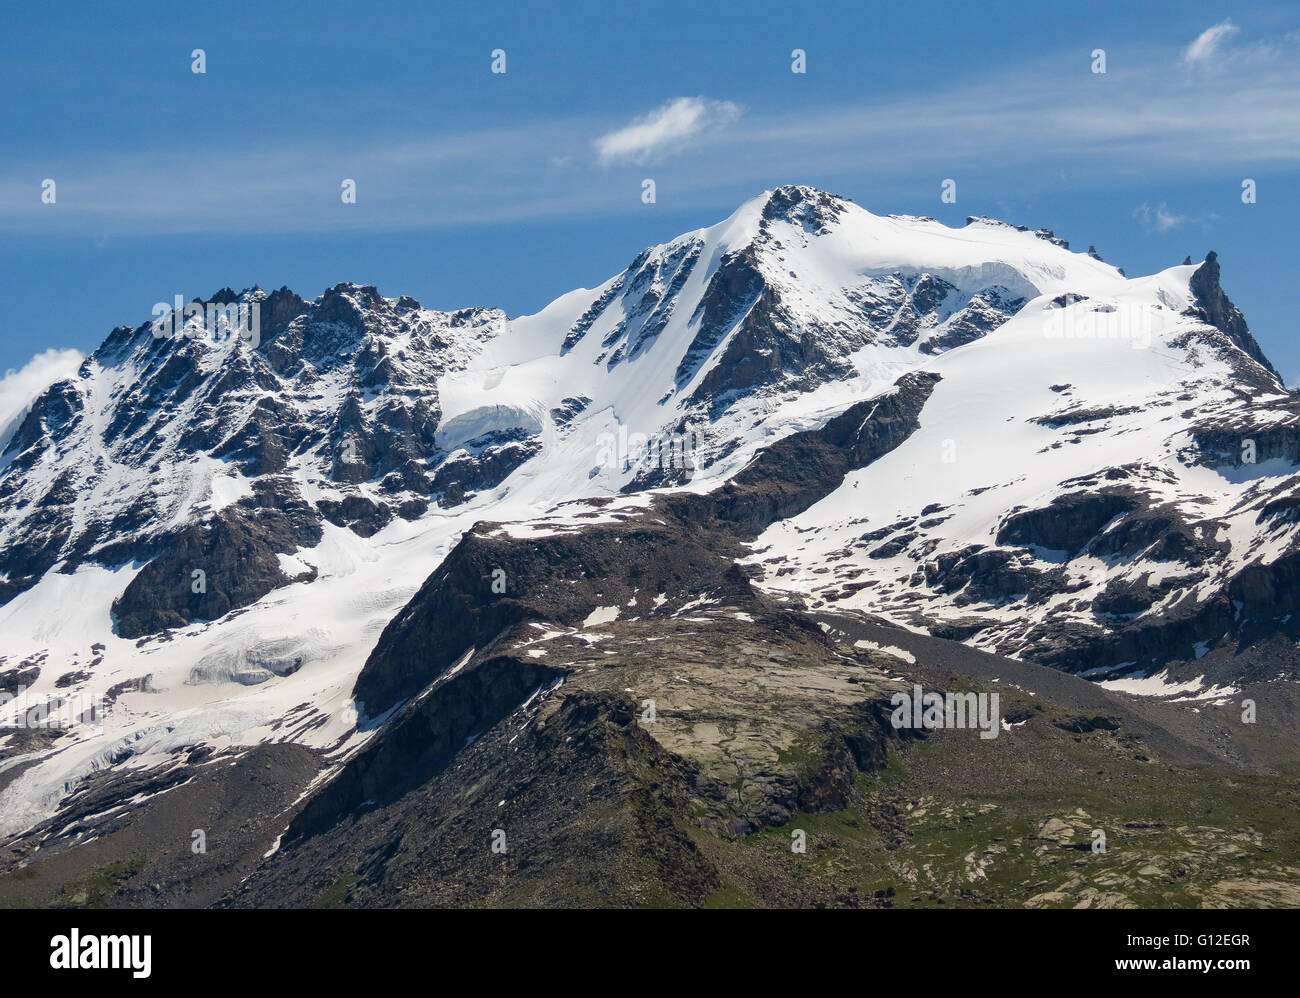 The Gran Paradiso mountain massif. Peak and glaciers. Valle d'Aosta. Italian Alps. Europe. Stock Photo